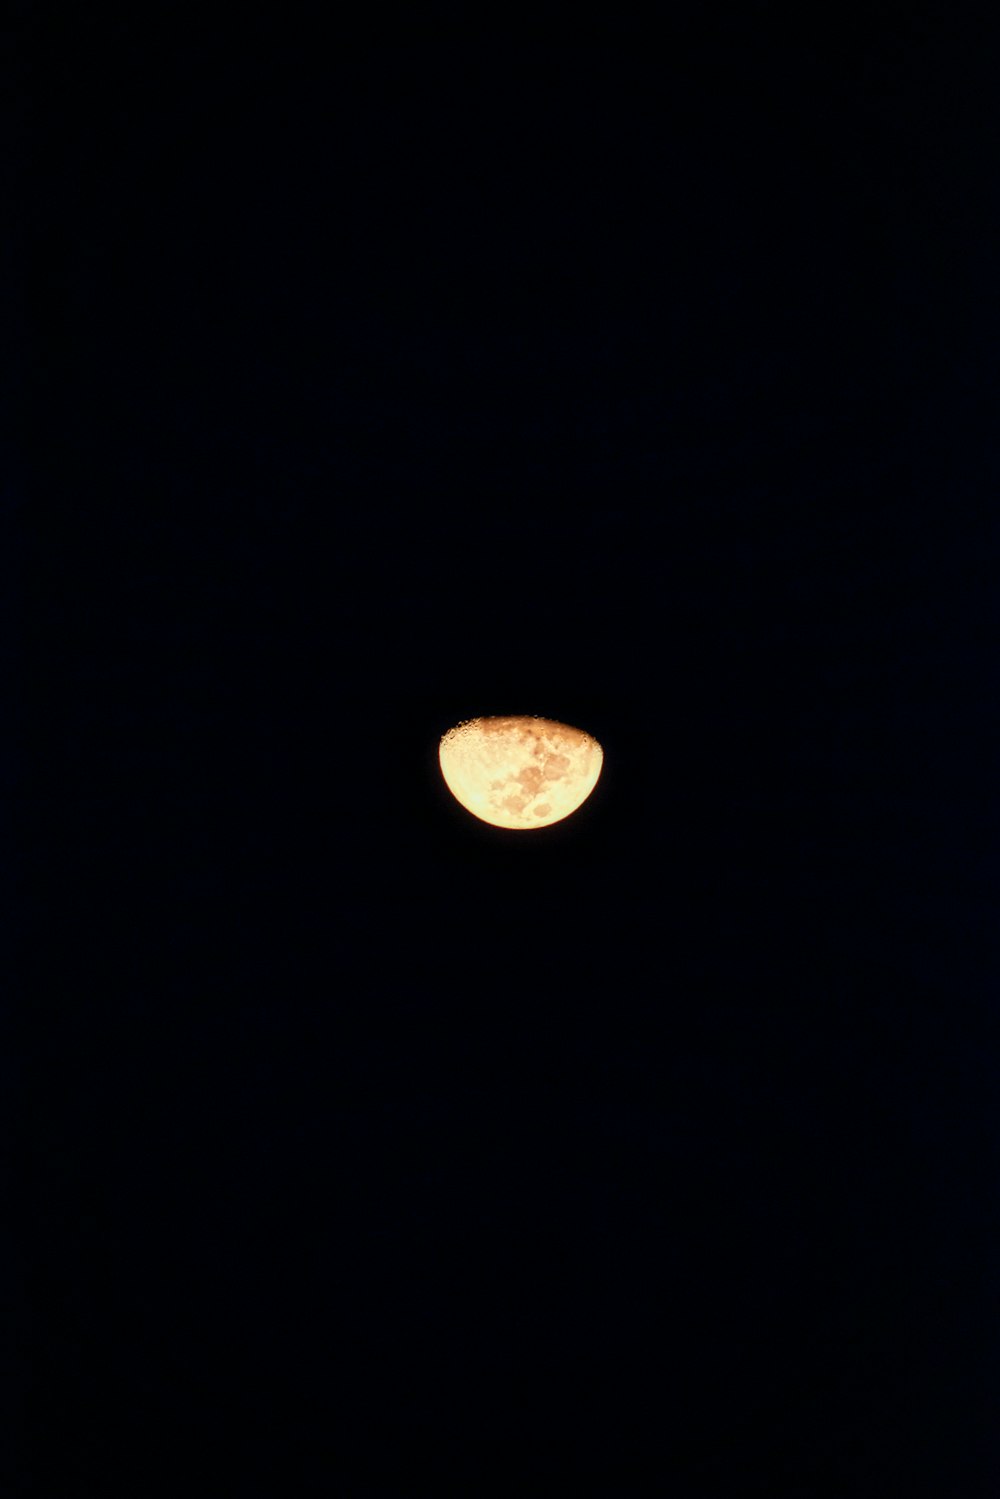 a full moon seen through the dark night sky